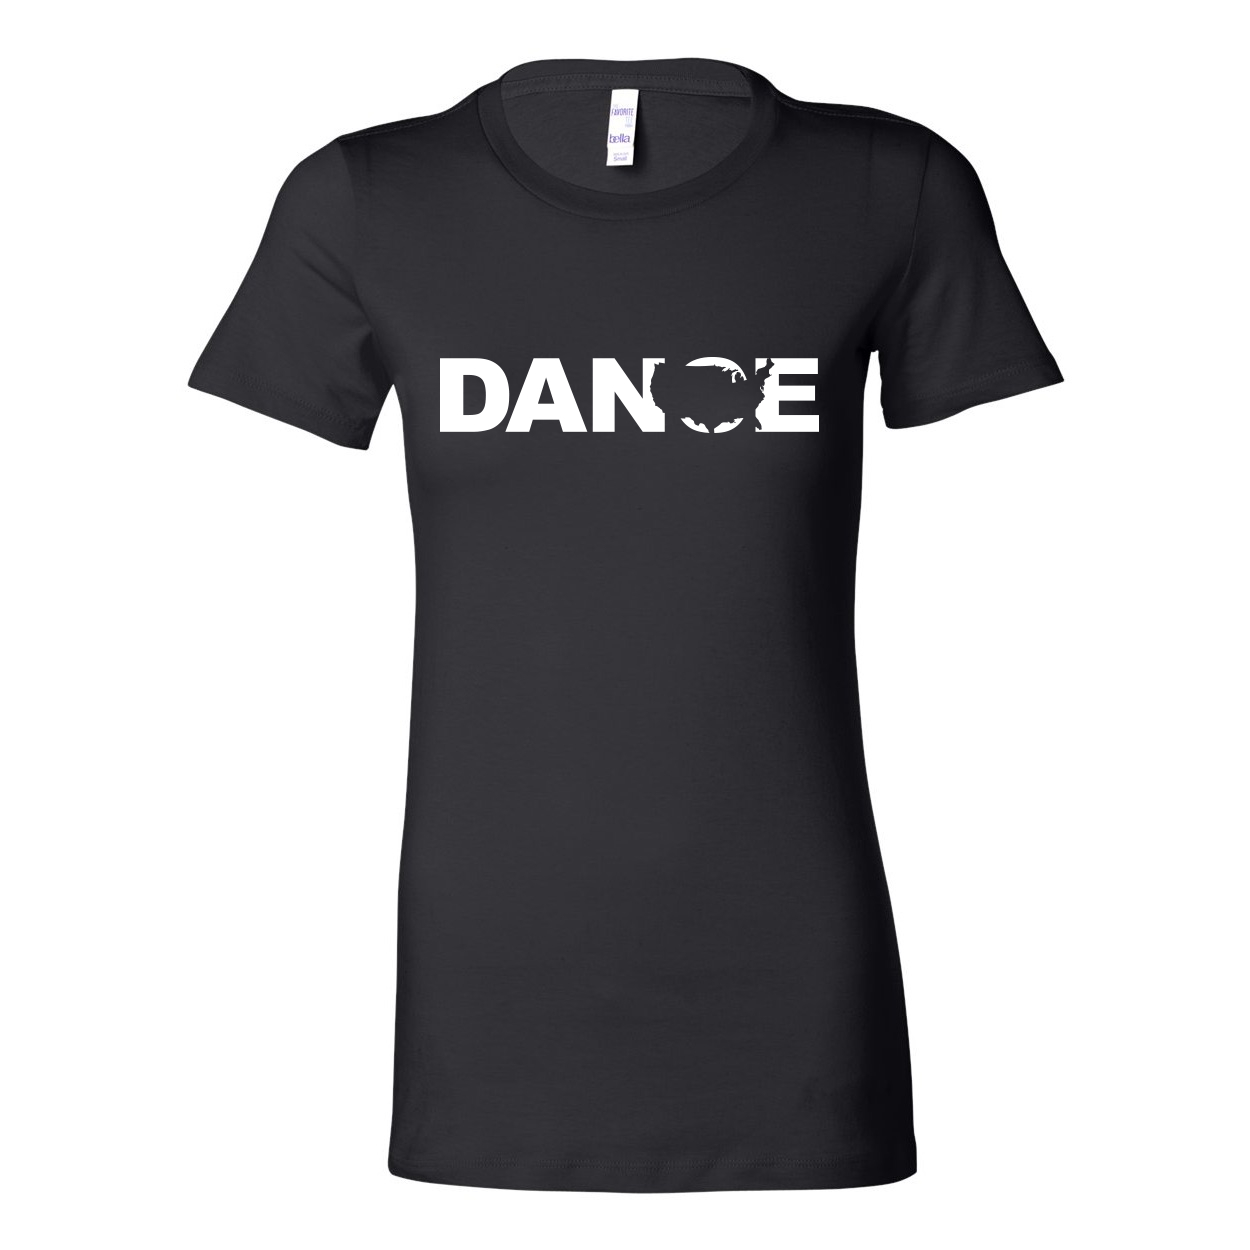 Dance United States Classic Women's Fitted Tri-Blend T-Shirt Black (White Logo)